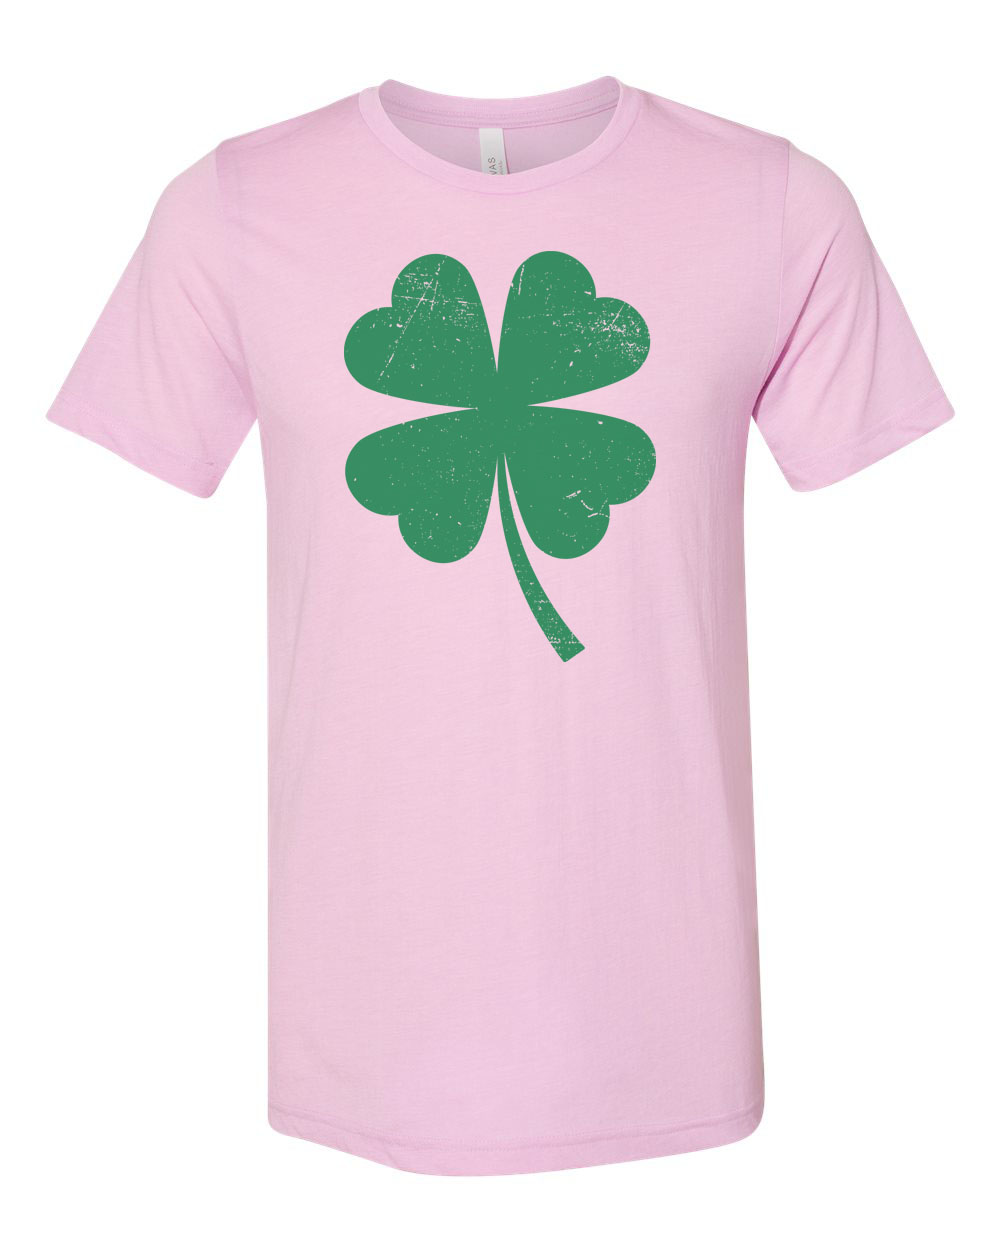 St. Patricks Day Shirt, Shamrock Shirt, Four Leaf Clover, Unisex Fit, Distressed Clover, Clover Shirt, 4 Leaf Clover, Shamrock, St Patricks, Lilac, SMALL - image 1 of 1